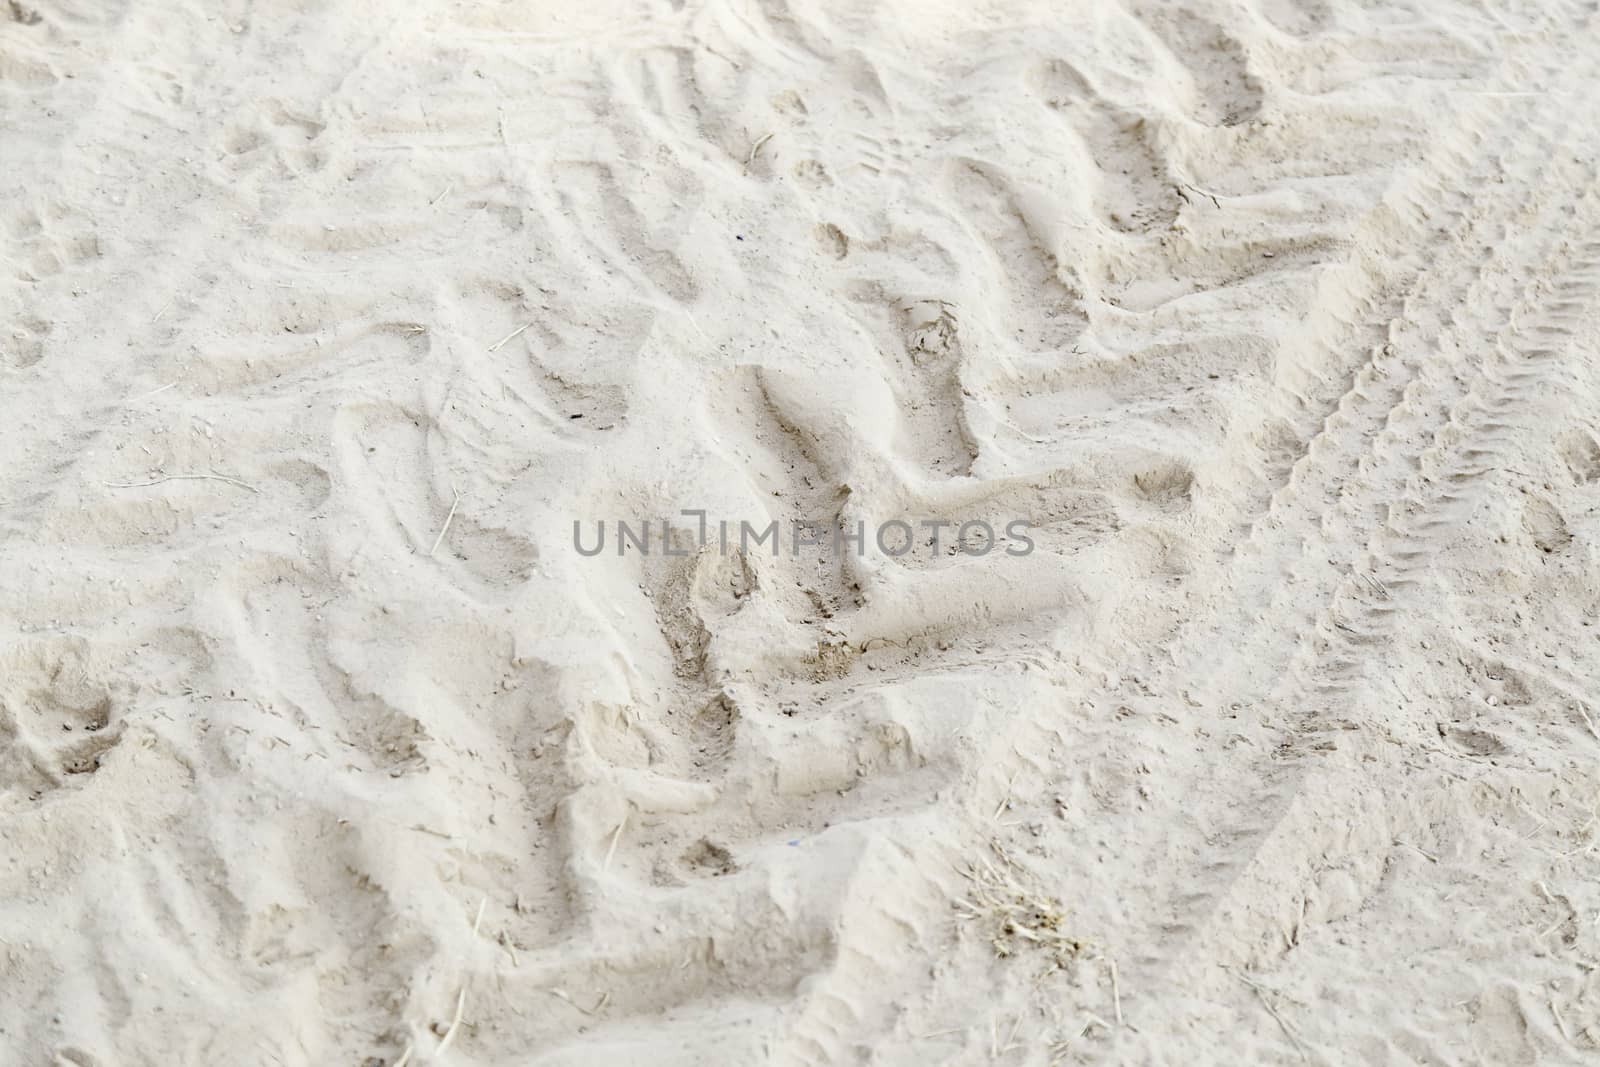 Footprint in the sand by esebene